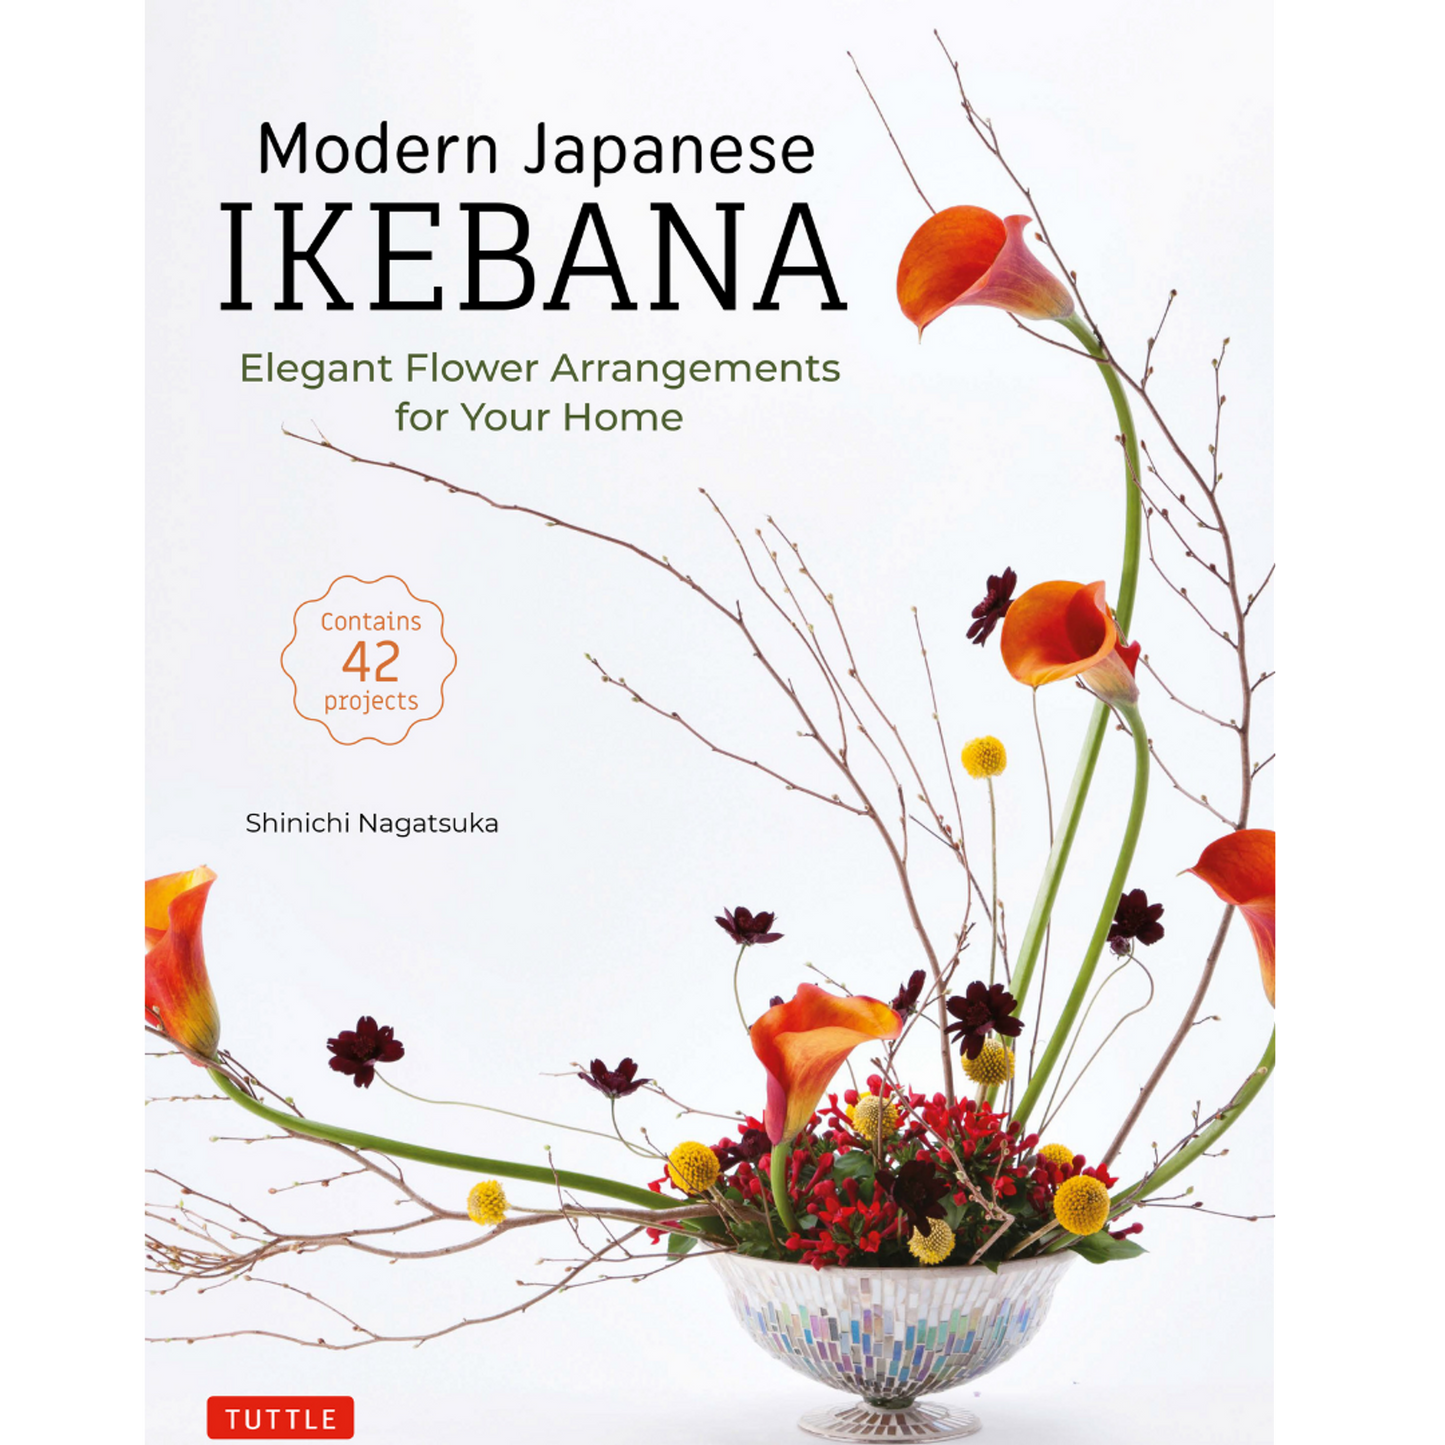 Modern Japanese Ikebana by Shinichi Nagatsuka